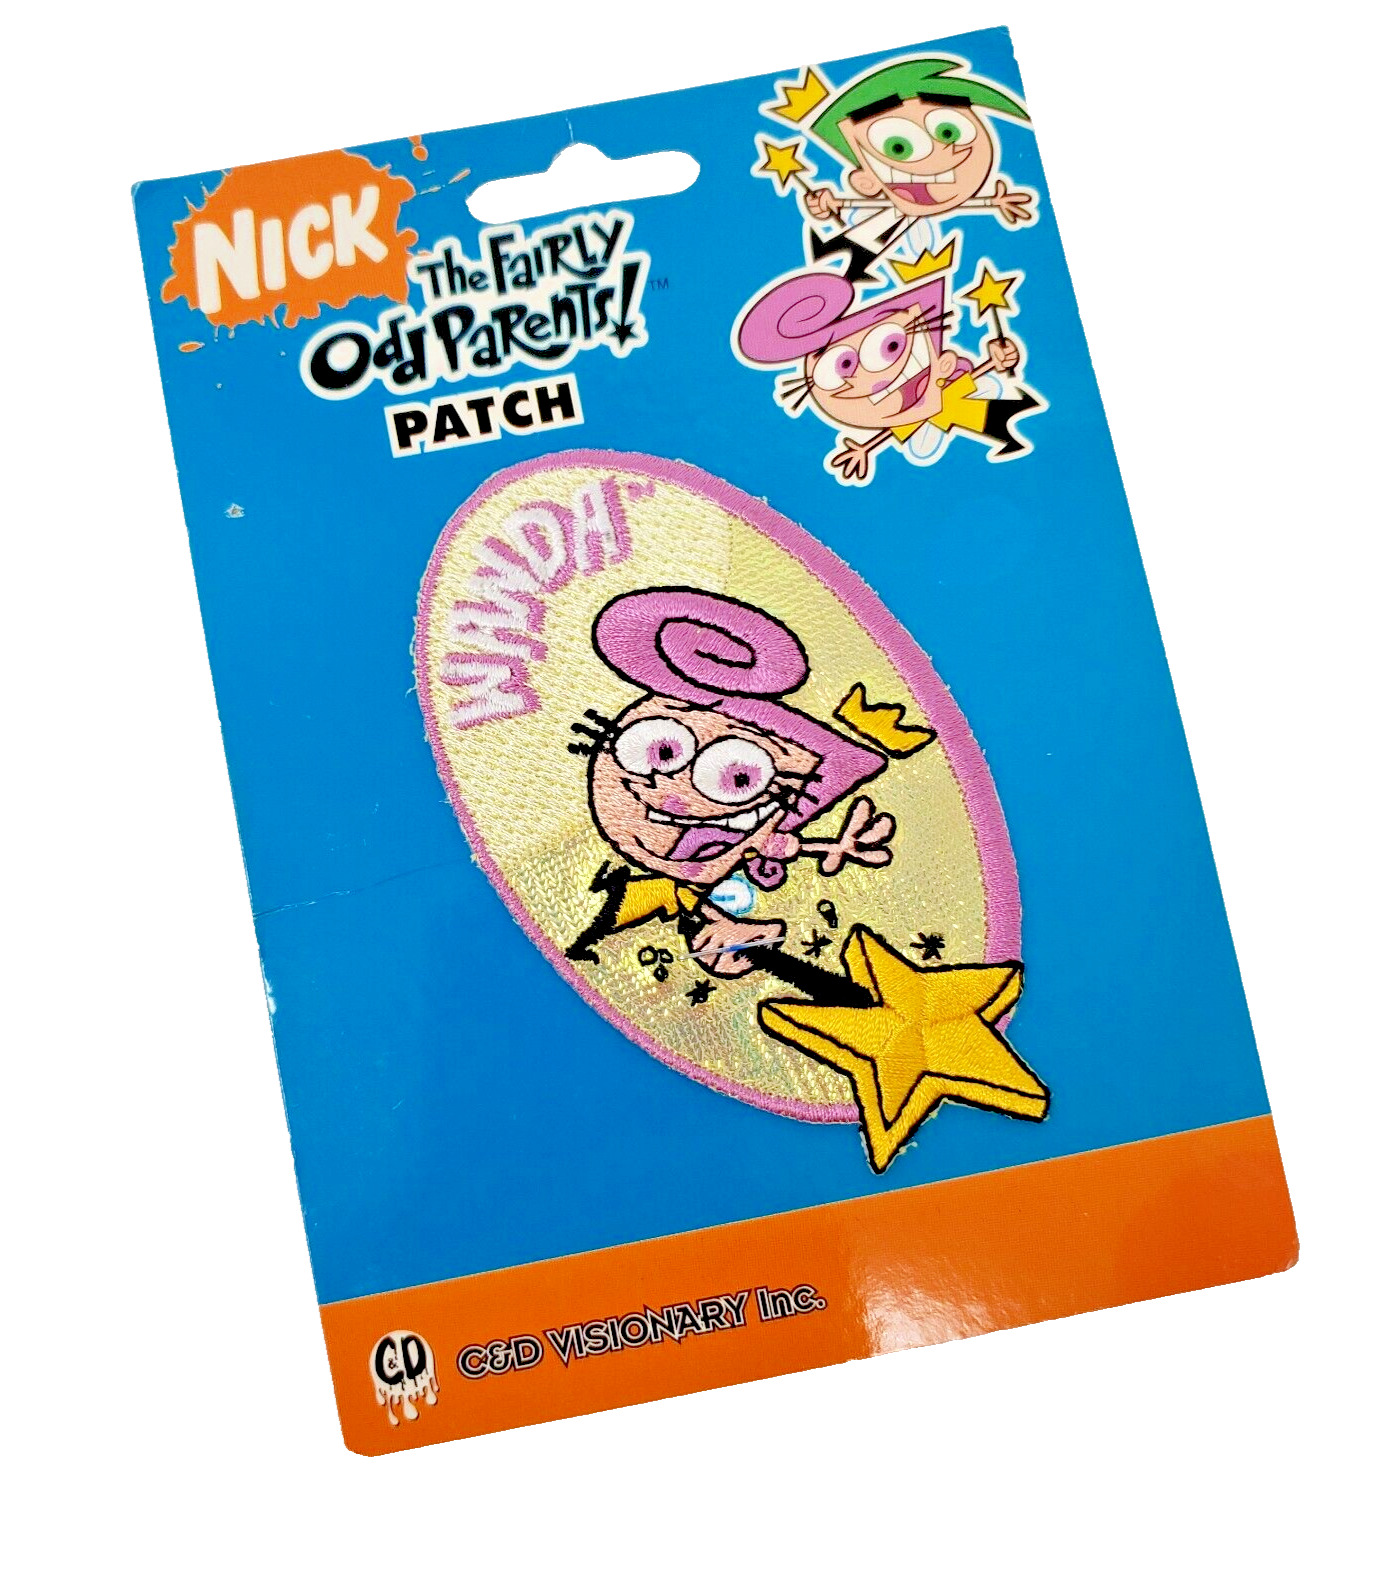 Nickelodeon The Fairly Odd Parents Iron On Patch Wanda 2003